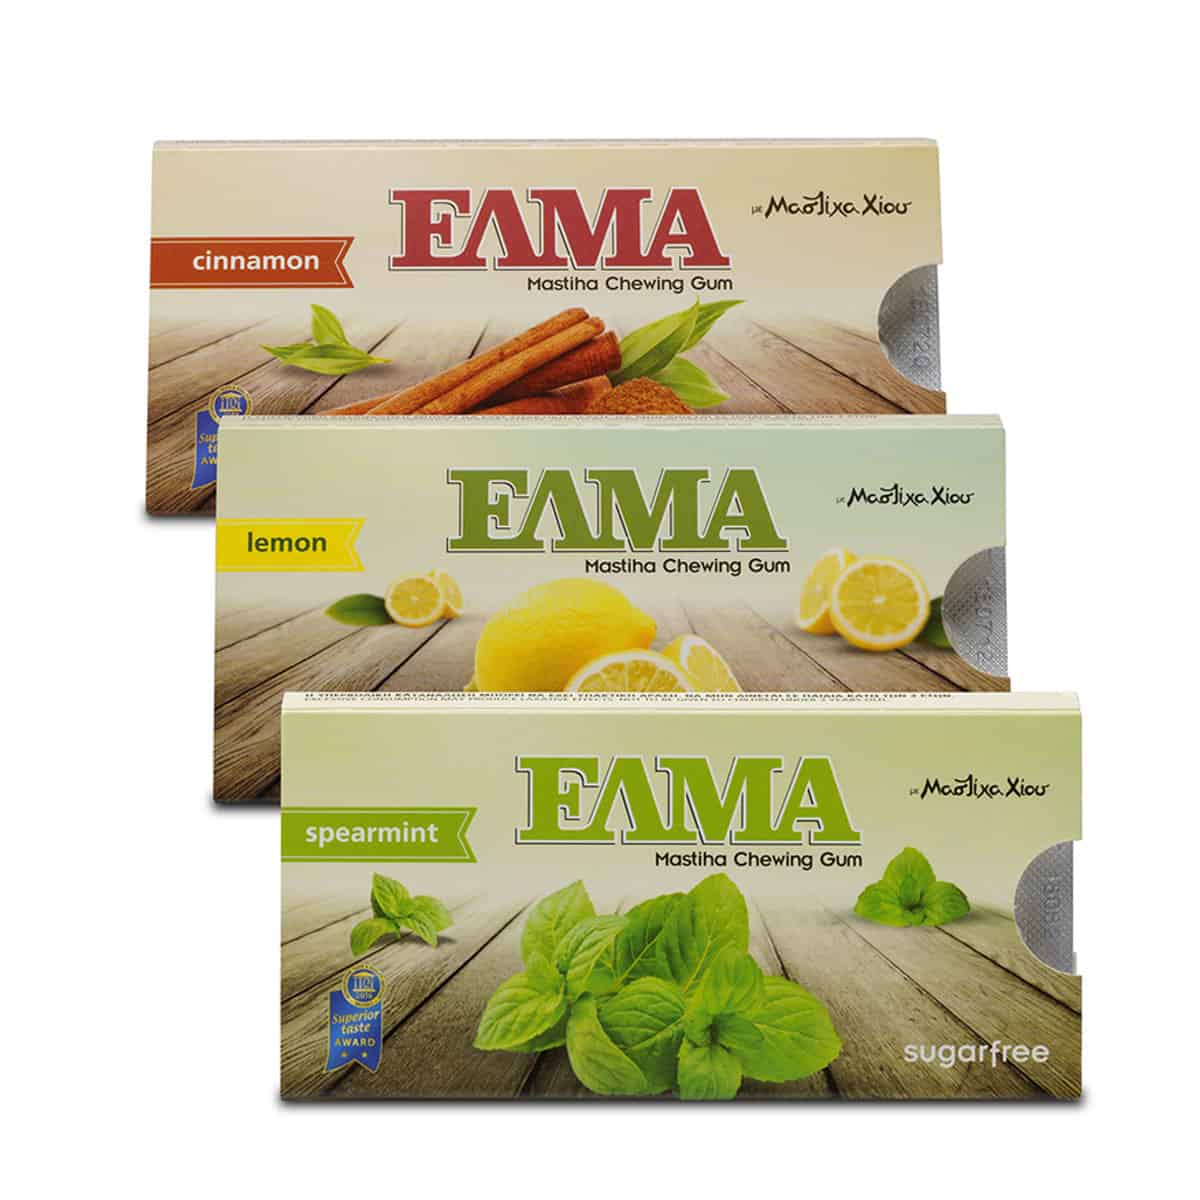 Chios Gum Mastic Growers Association, Elma - Mastichové žuvačky citrón, škorica, mäta 10ks, 14g